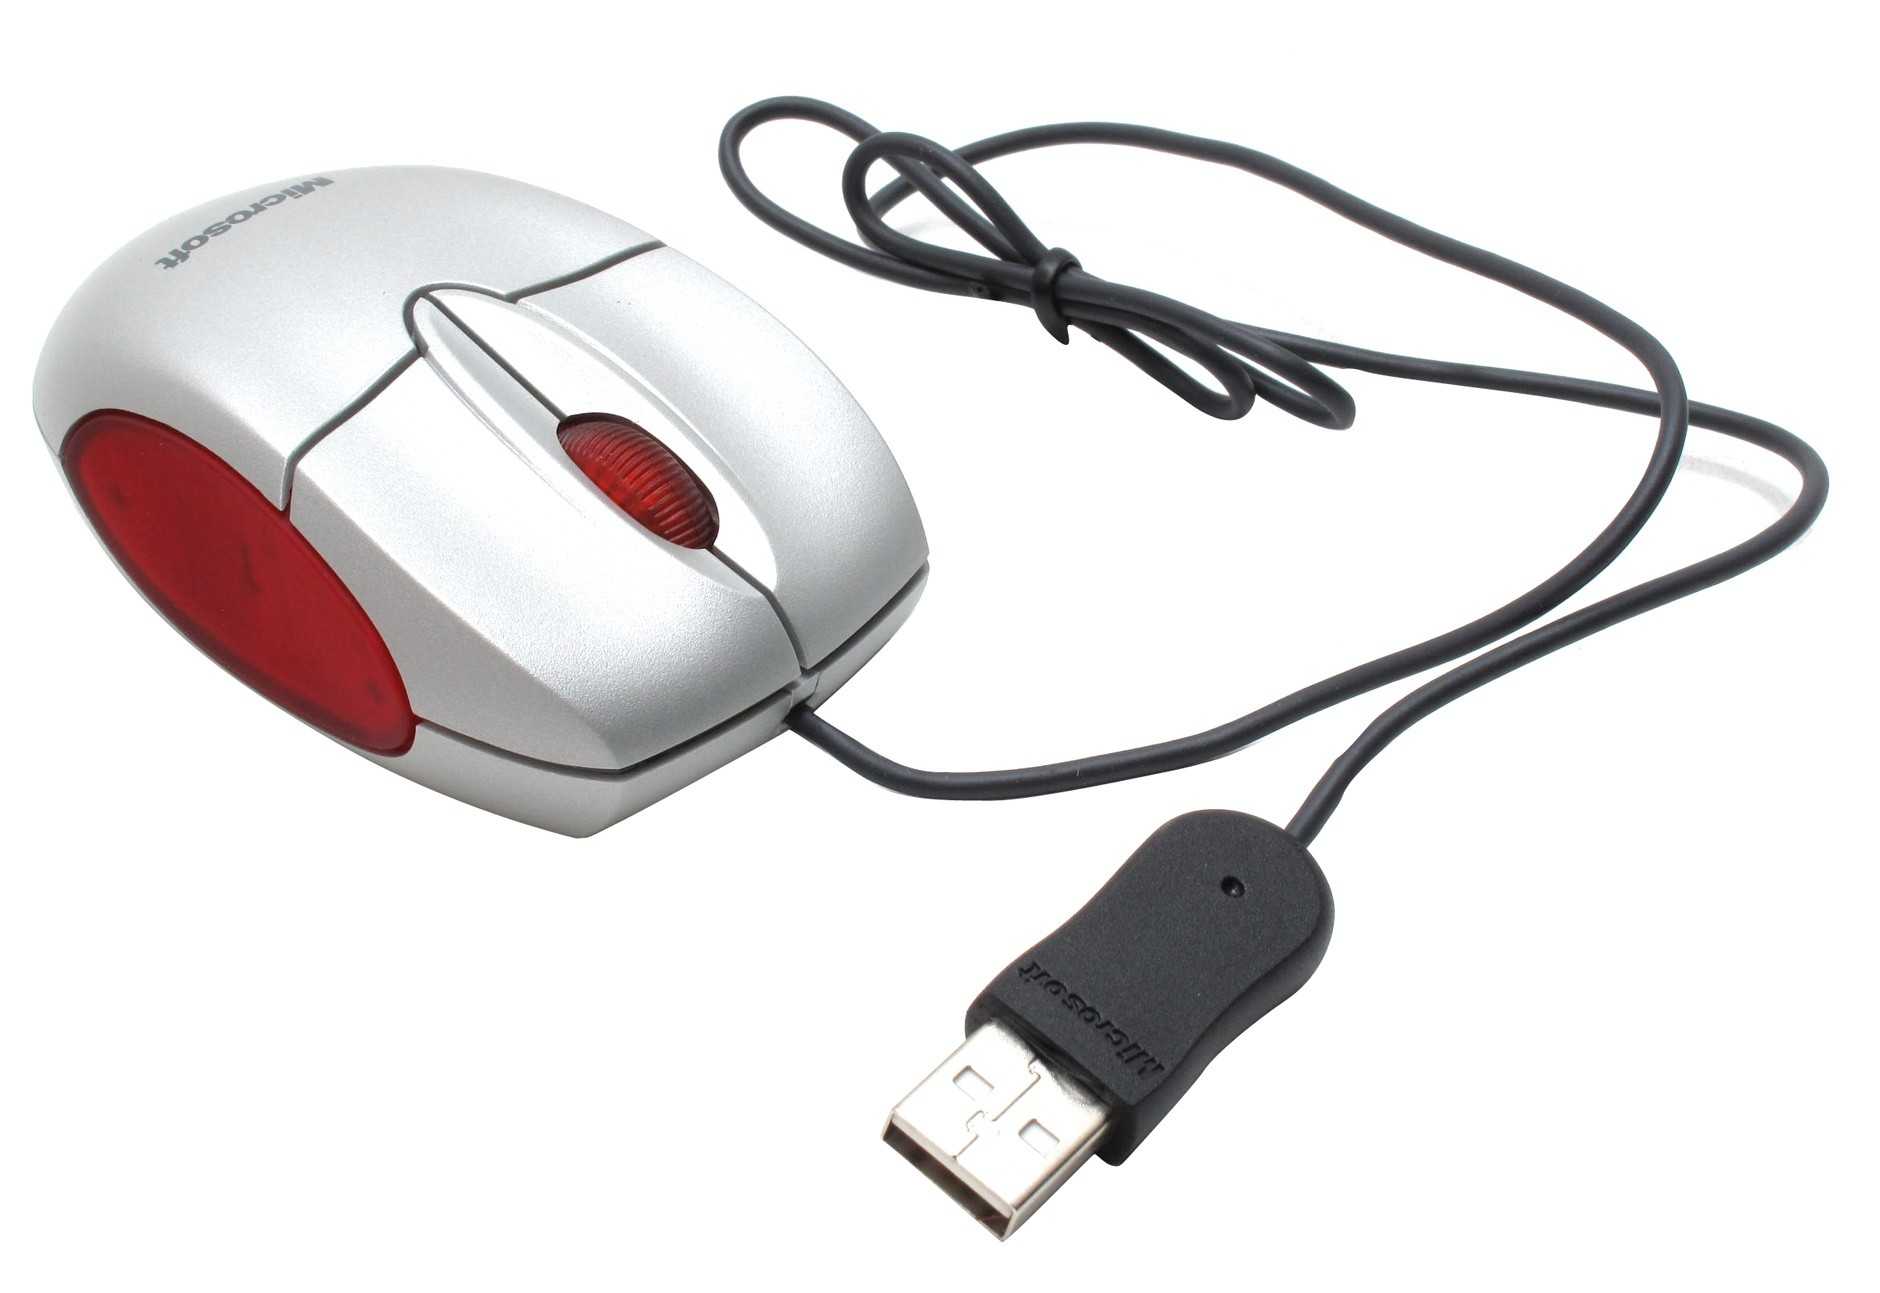 Microsoft notebook optical mouse silver-red usb - купить , скидки, цена, отзывы, обзор, характеристики - мыши